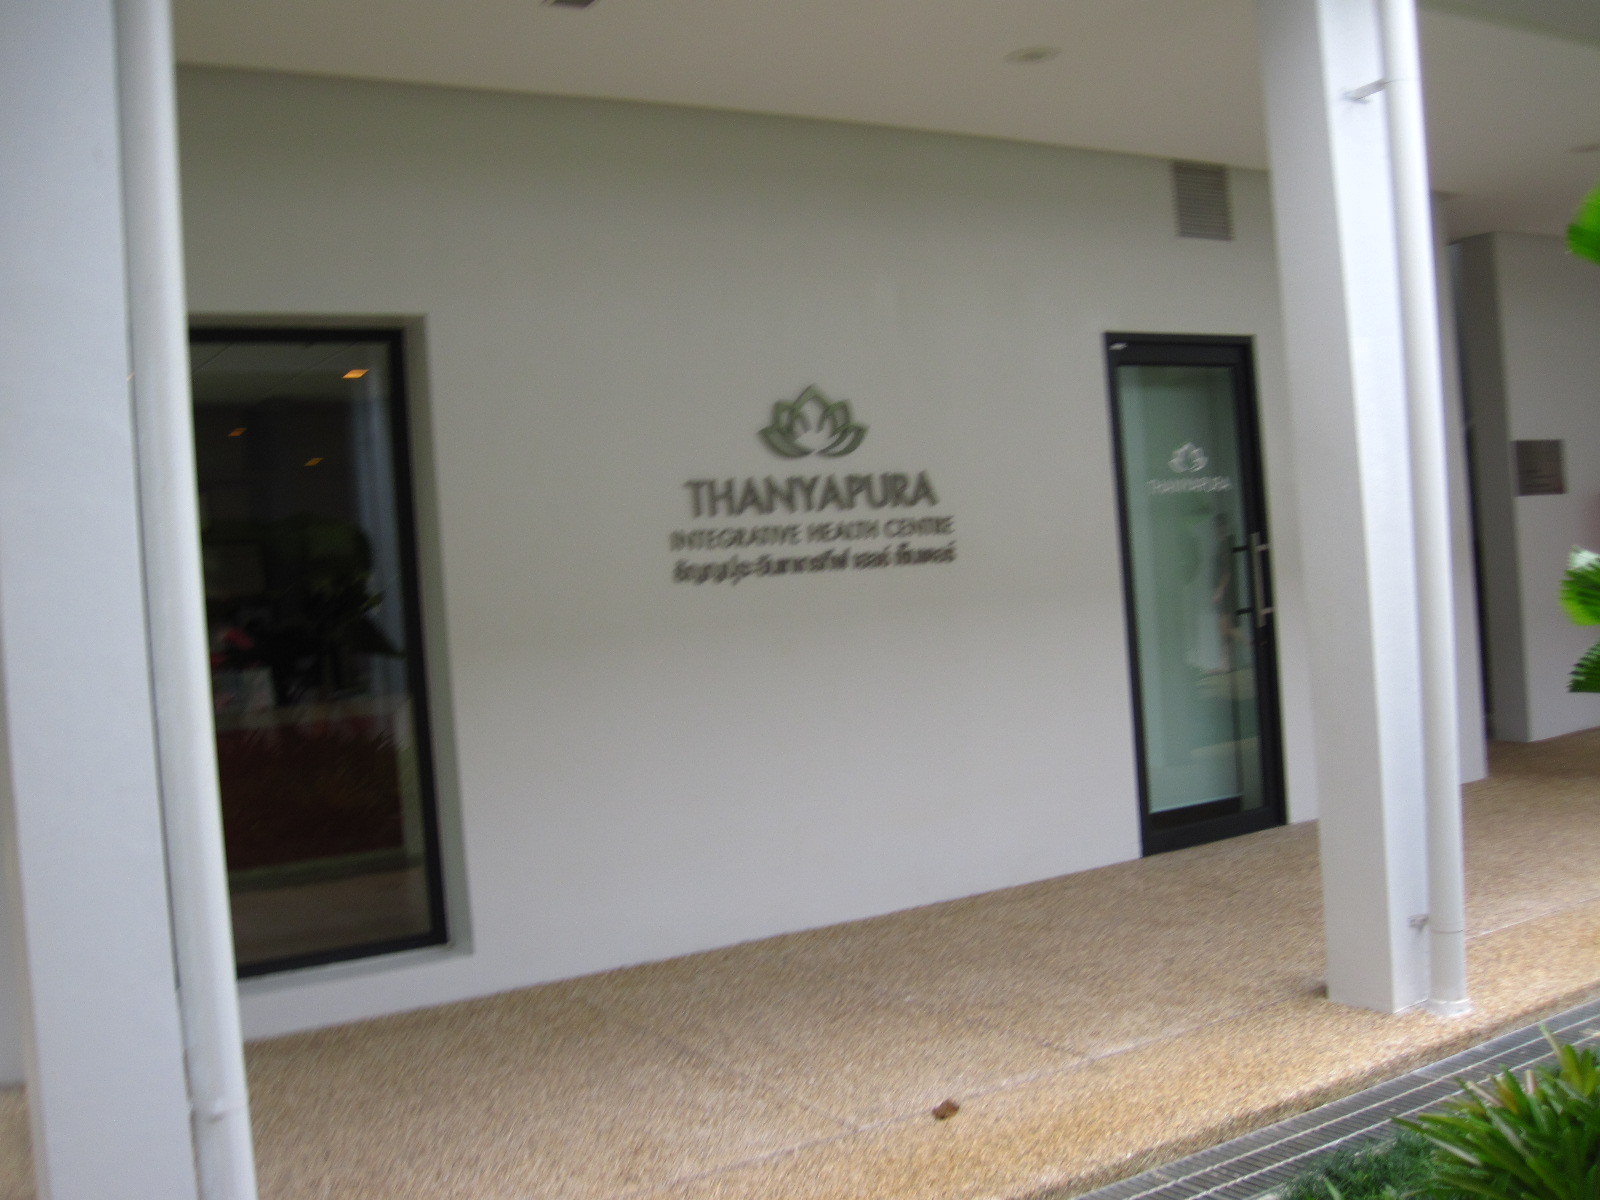 Thanyapura Integrative Health Centre